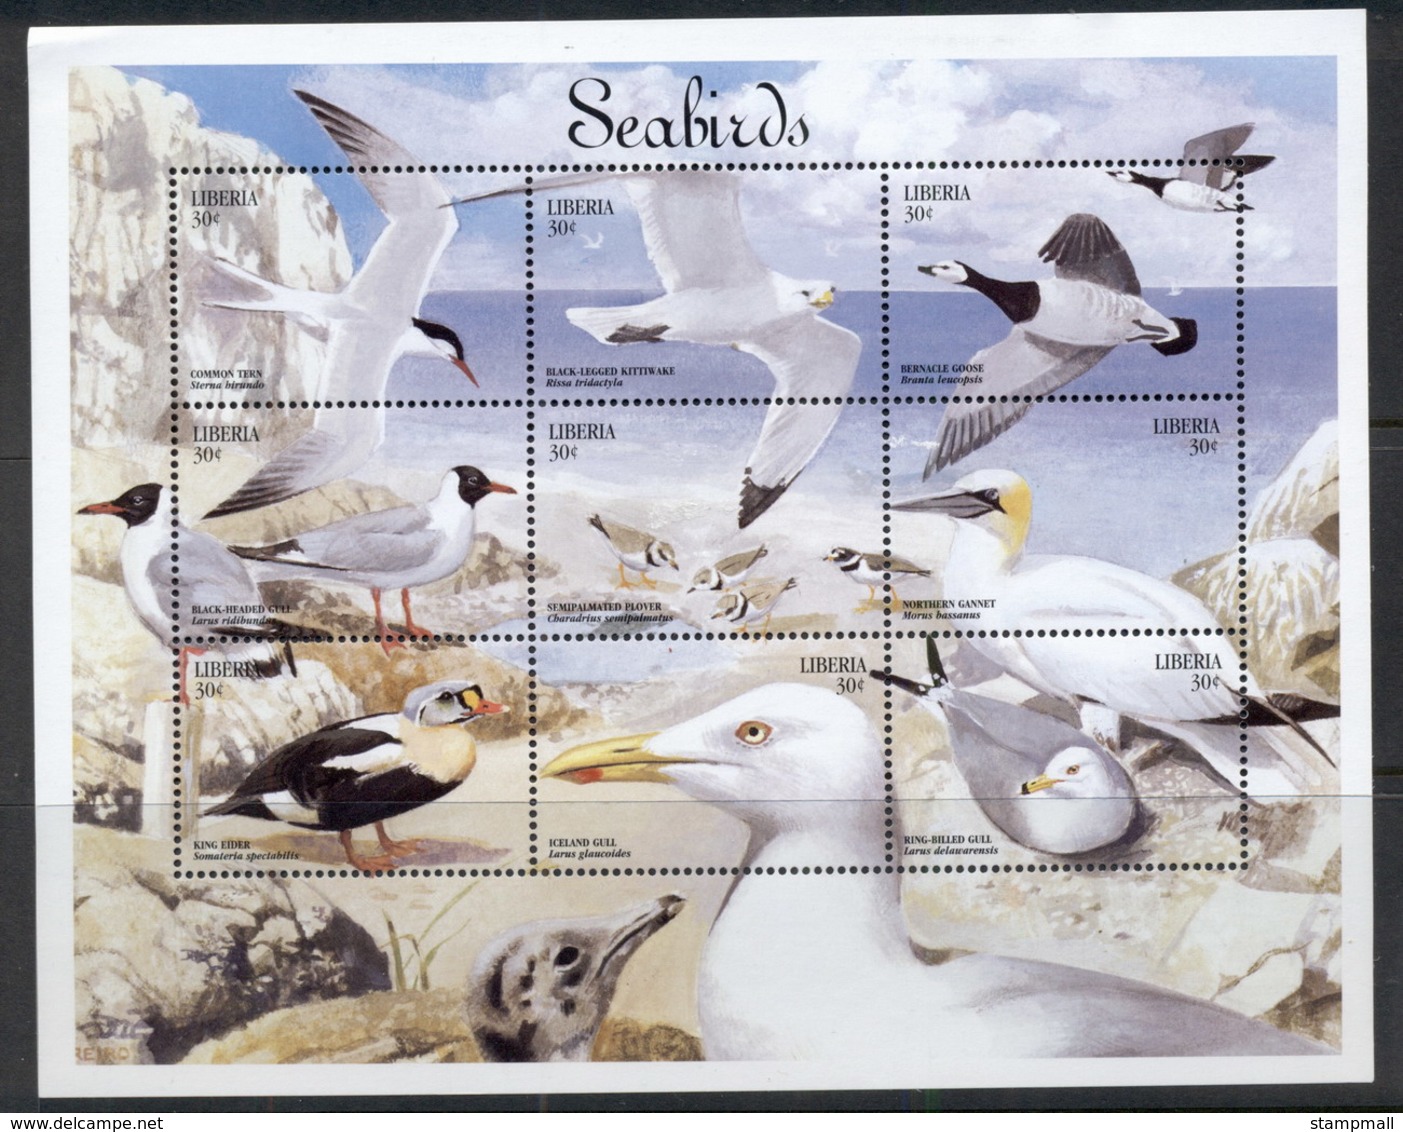 Liberia 1999 Seabirds Sheetlet 30c MUH - Liberia